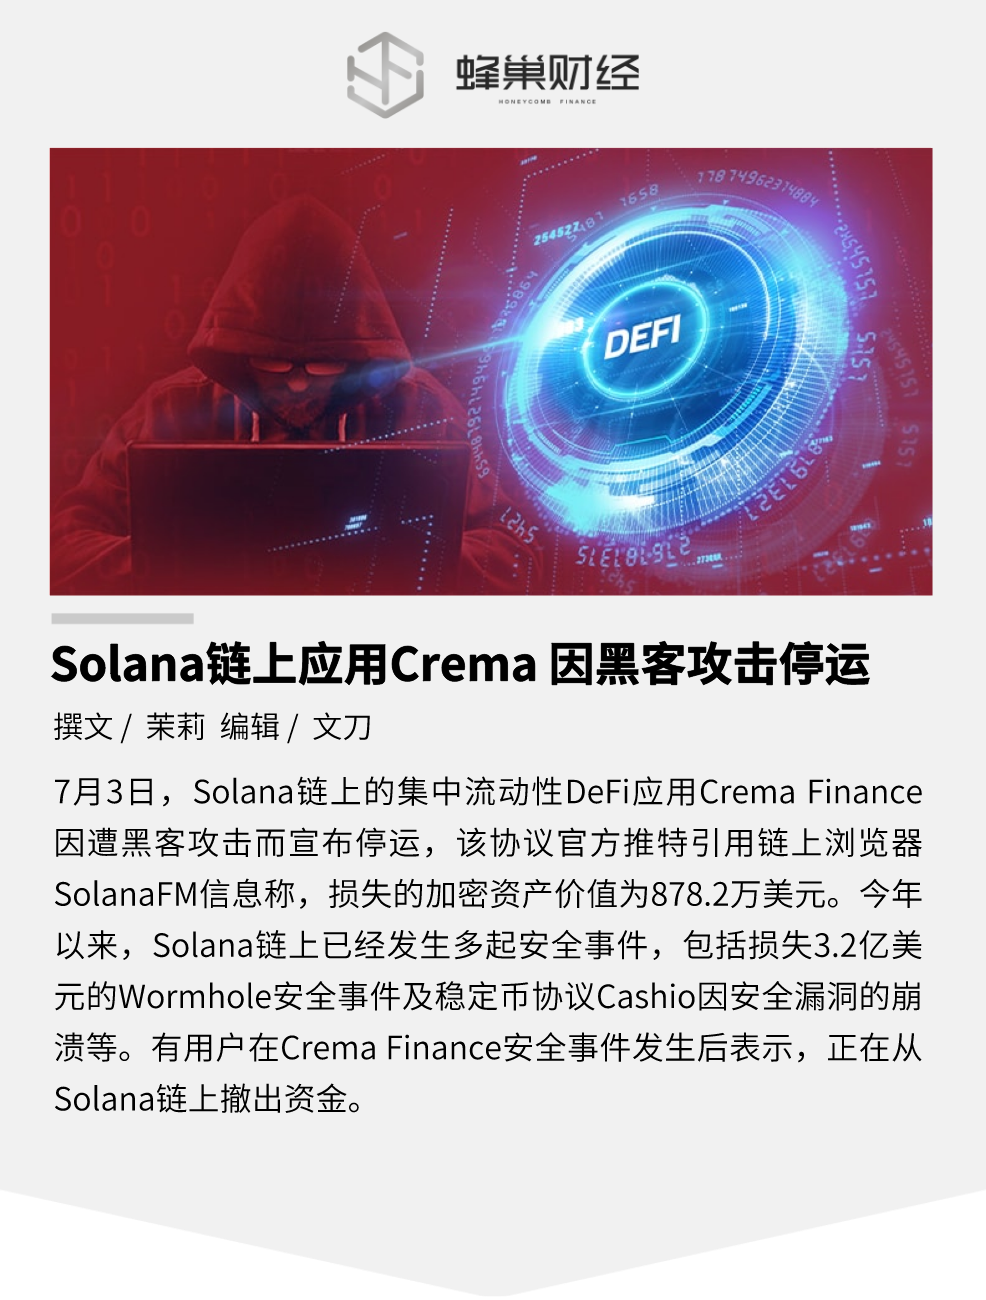 Solana 链上应用 Crema 因黑客攻击停运